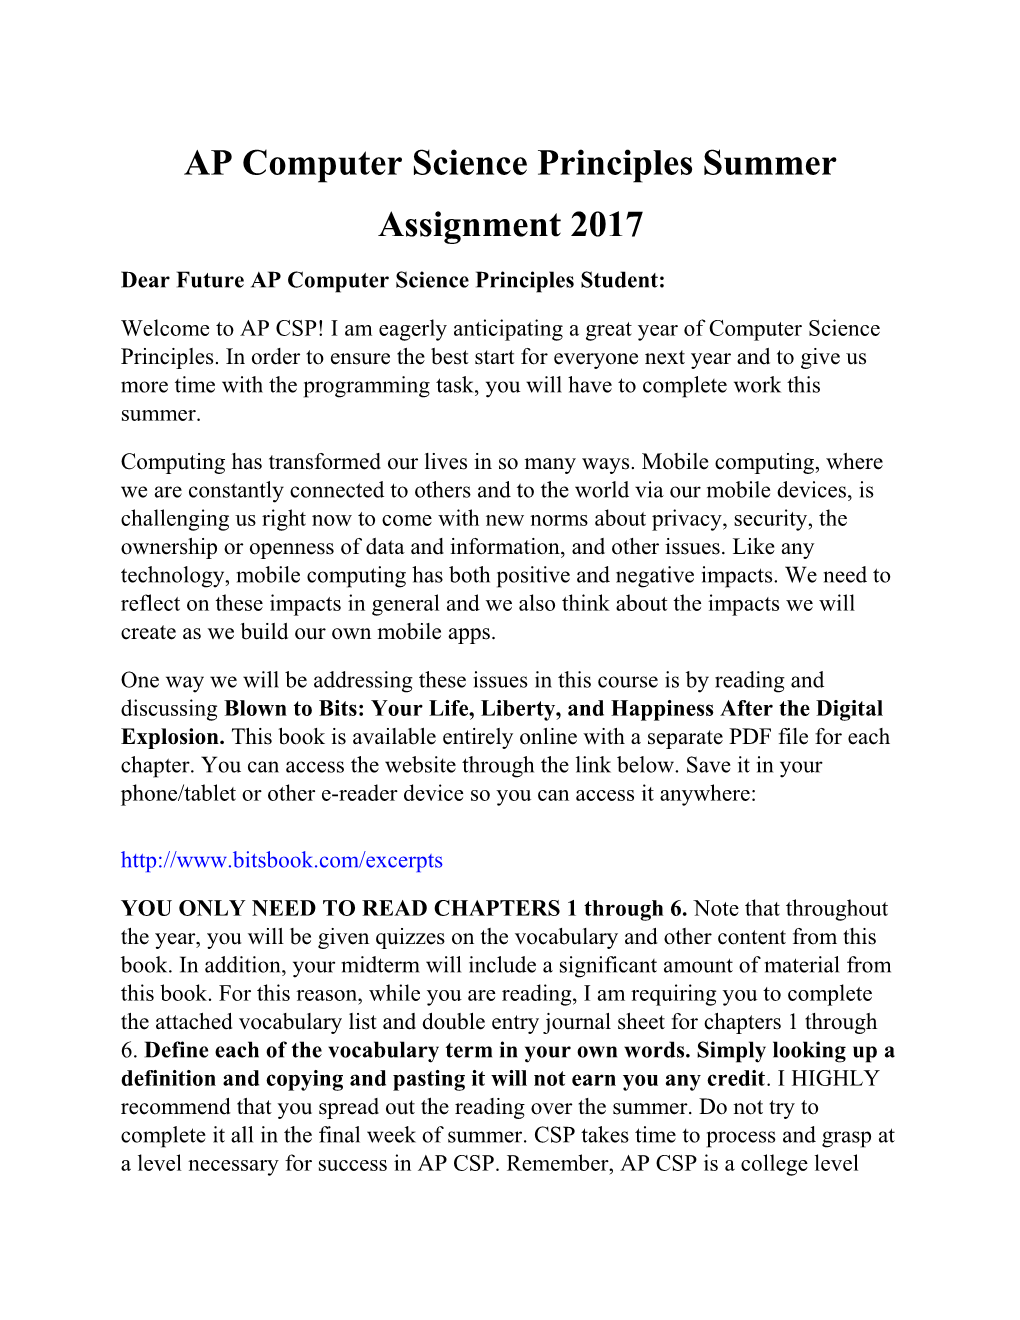 AP Computer Science Principles Summer Assignment 2017